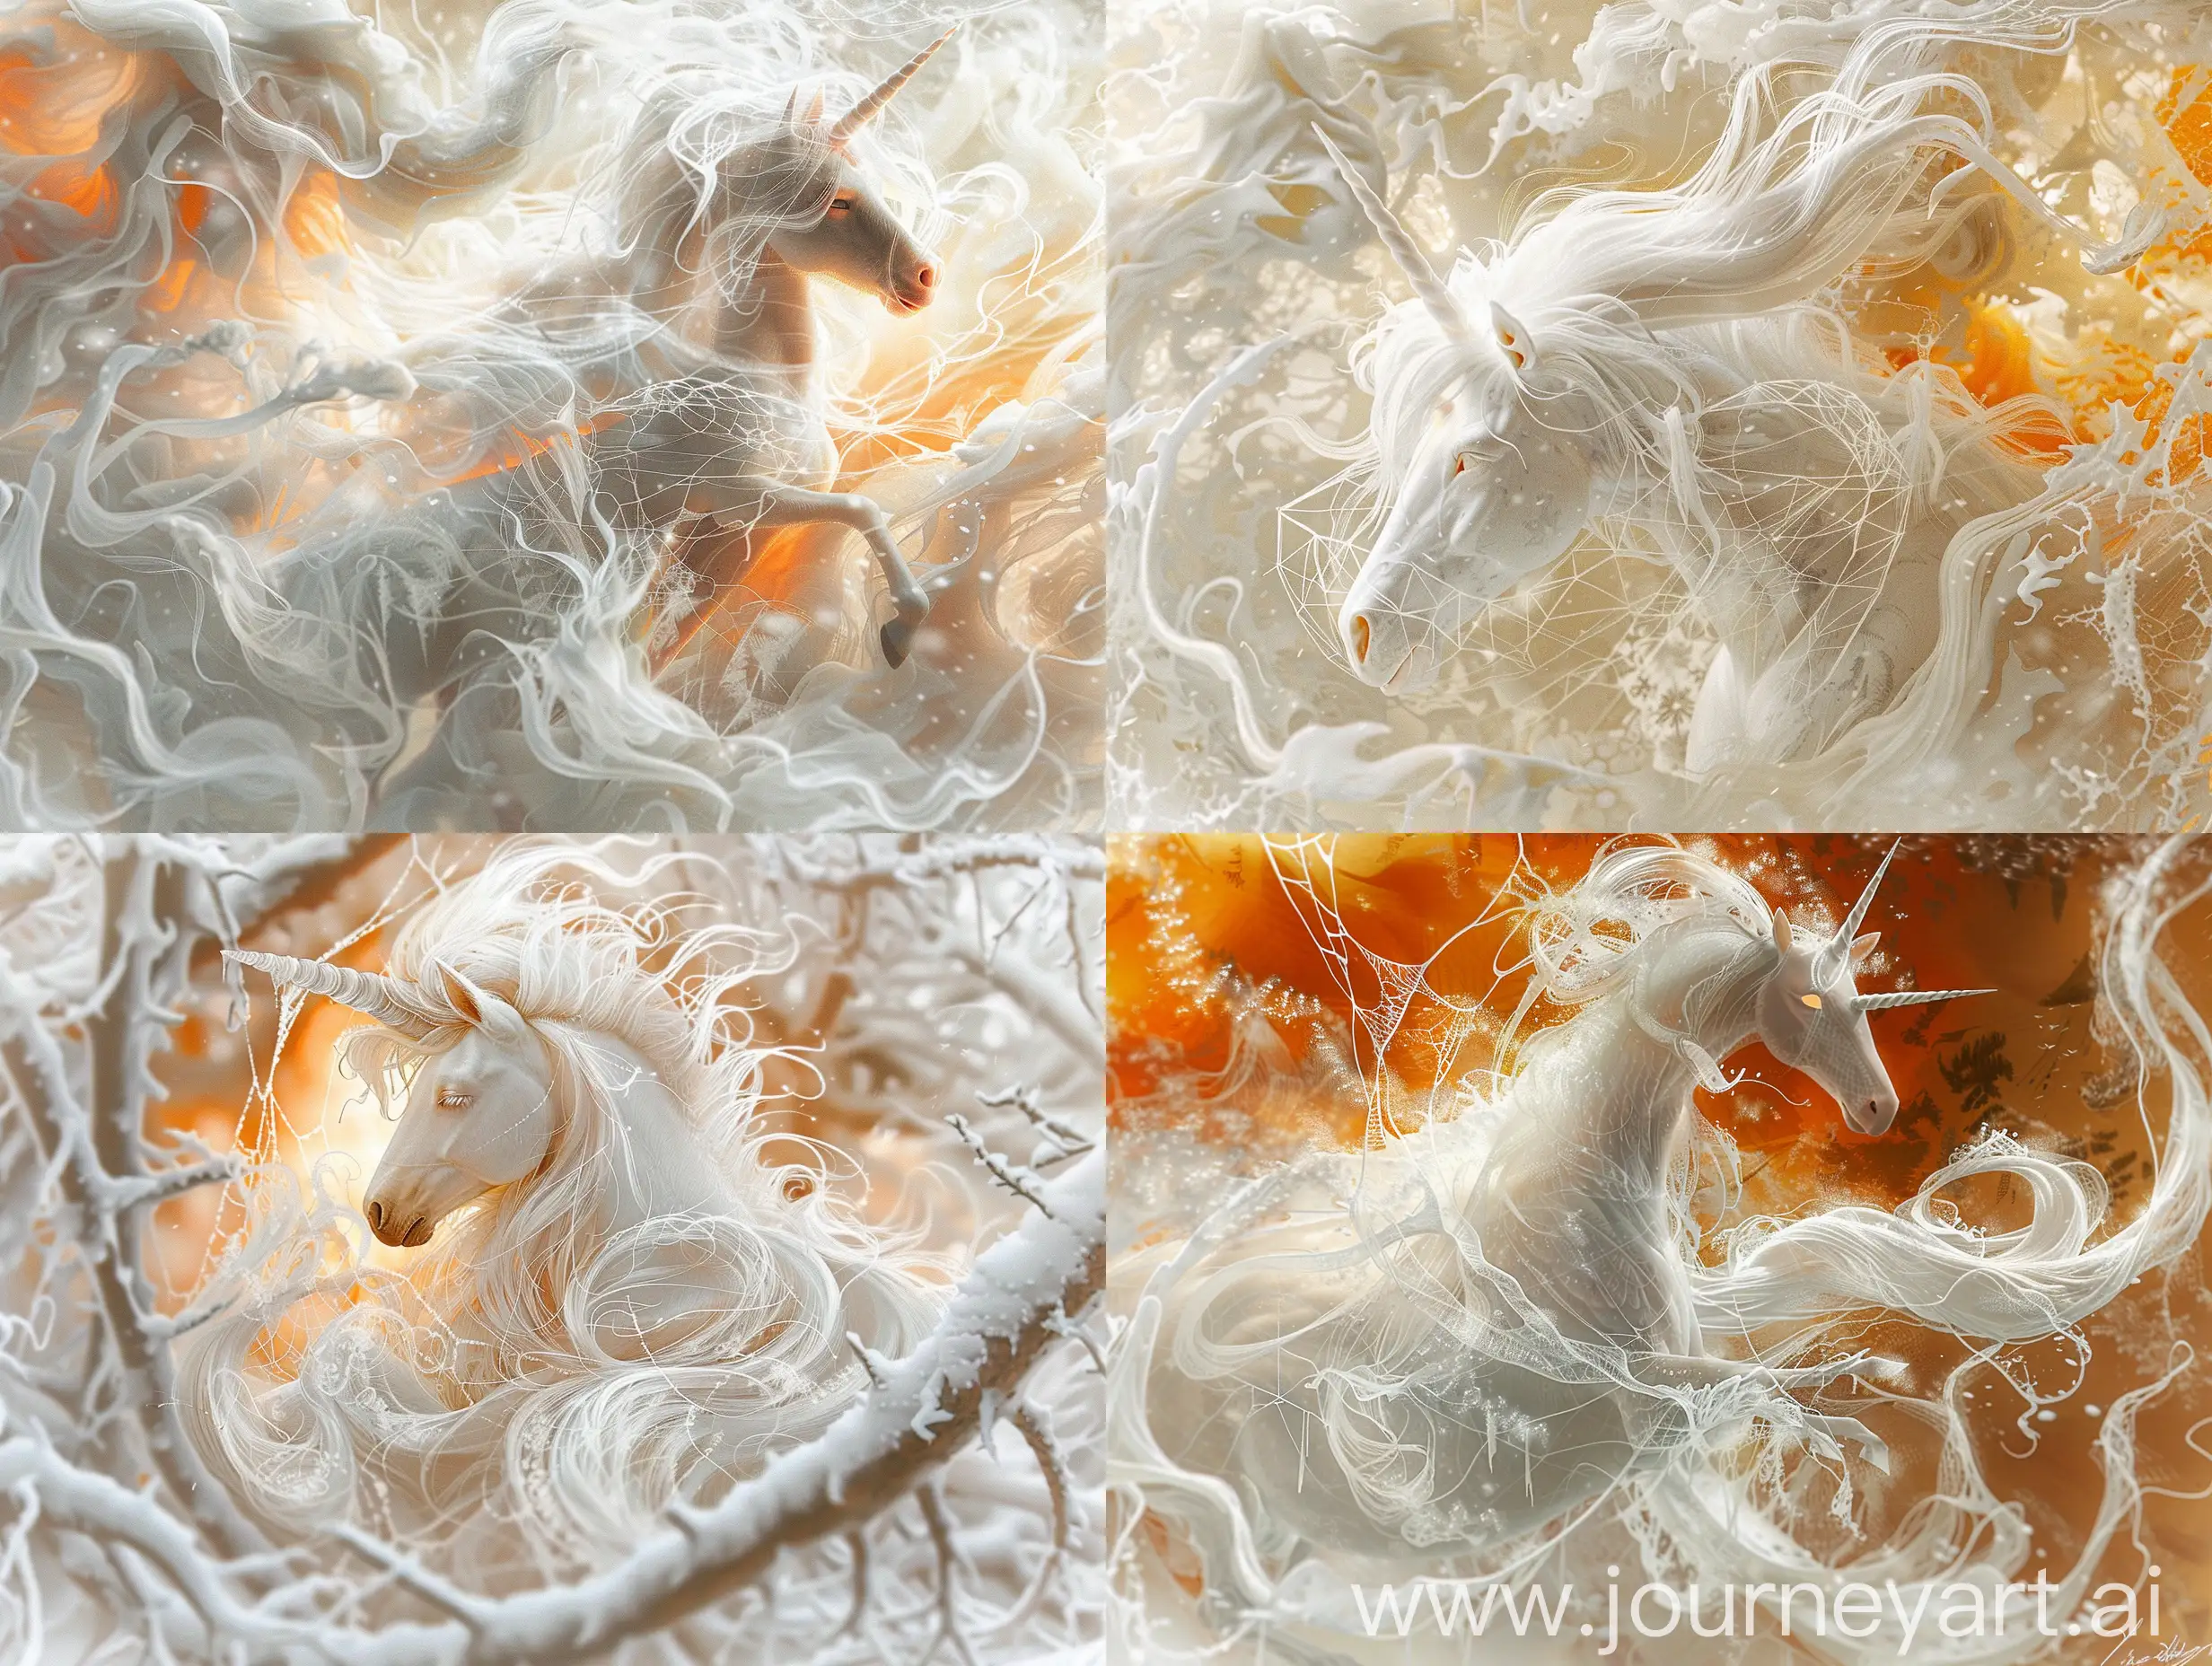 Snowy-White-Hybrid-Girl-Unicorn-in-Delicate-Icy-Web